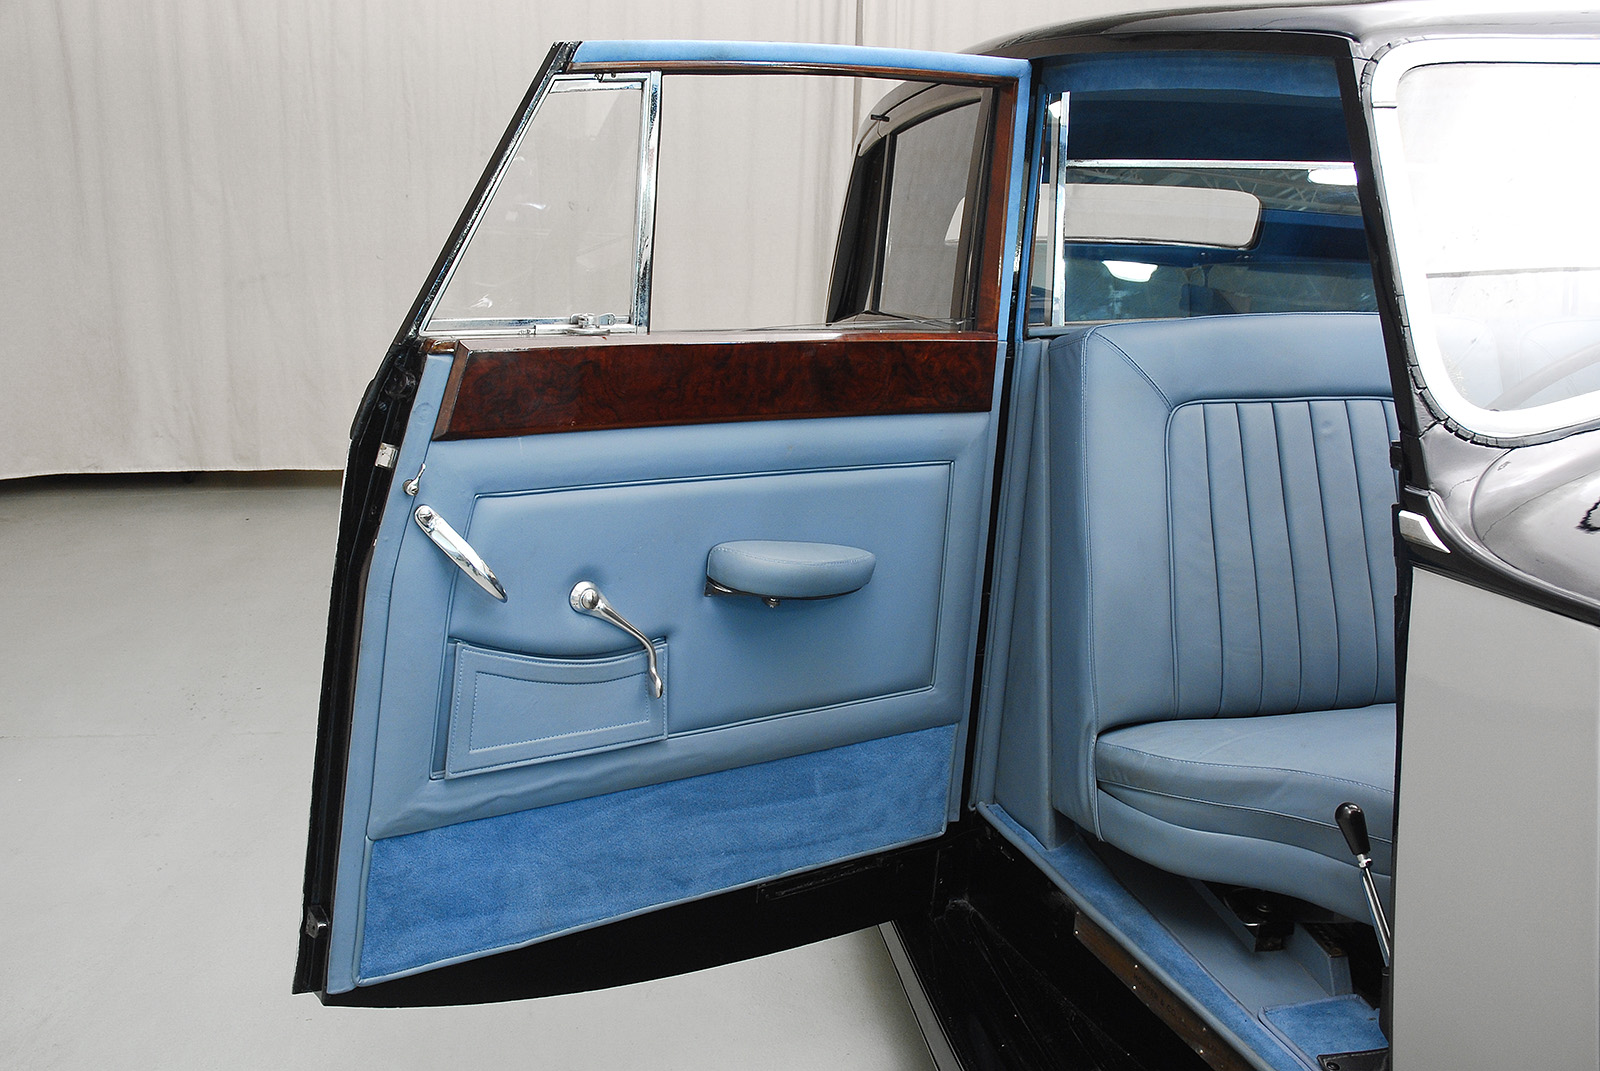 1954 rolls-royce silver wraith coachbuilt